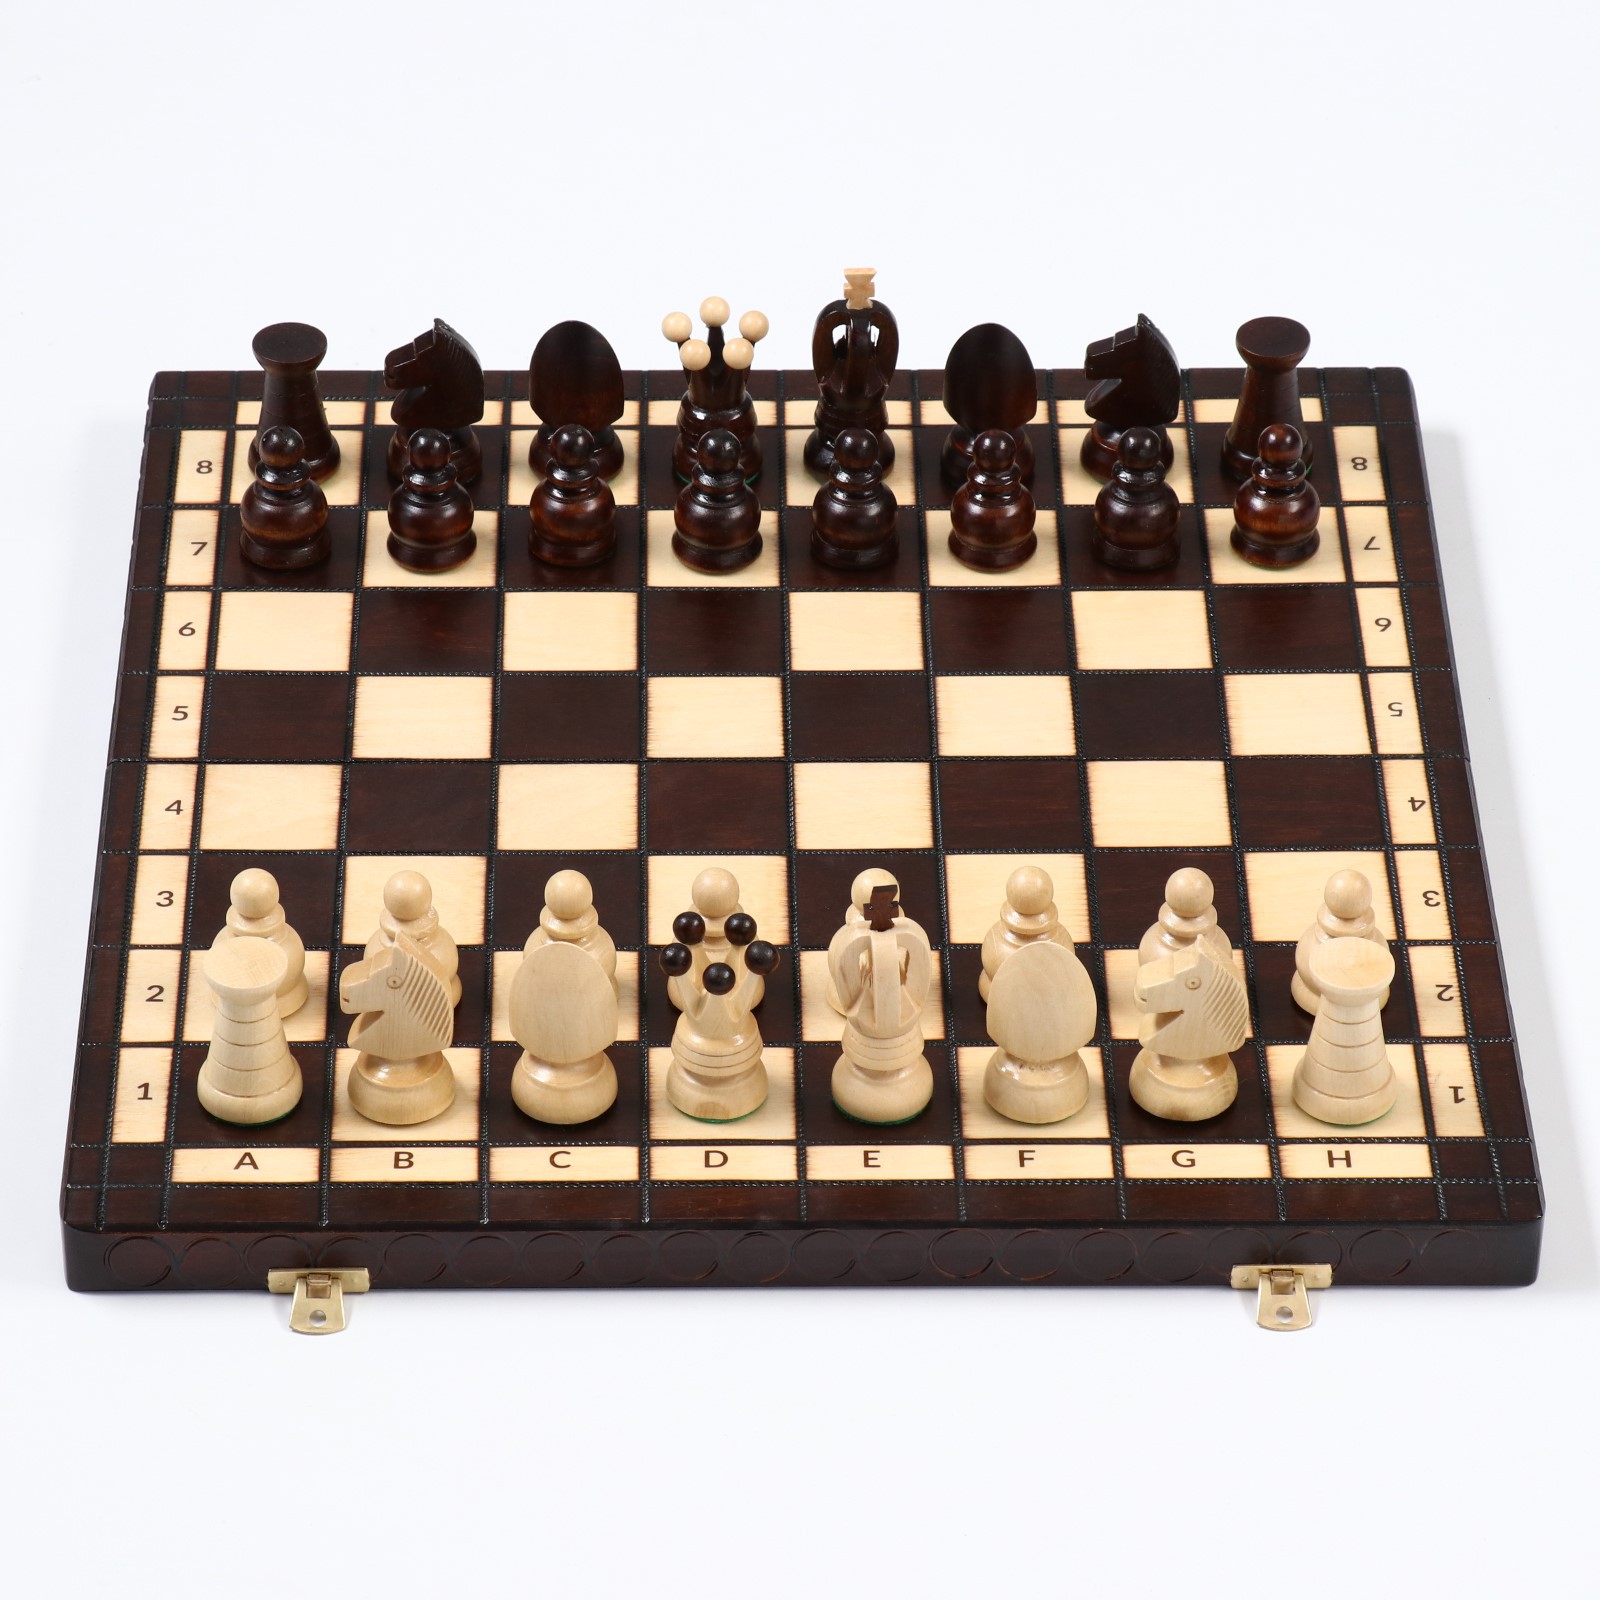 Шахматы Sima-Land «Королевские» 44х44 см король h=8 см пешка h 4.5 см - фото 1